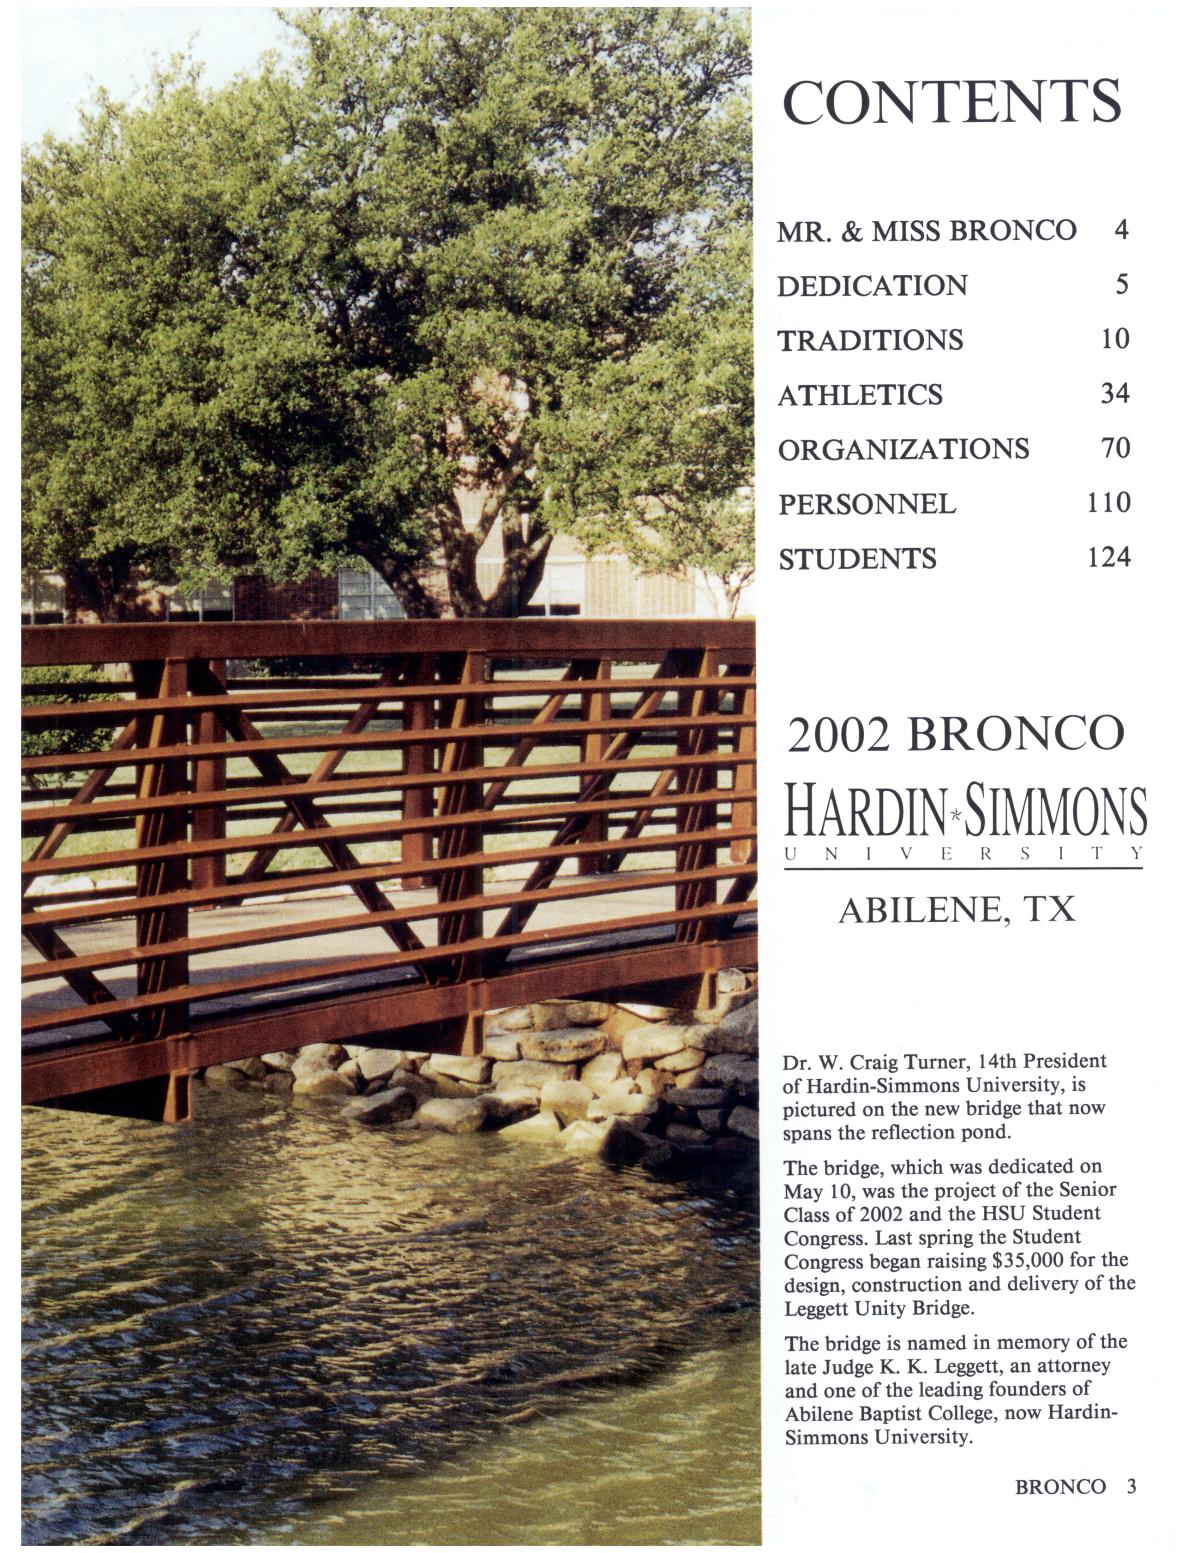 The Bronco, Yearbook of Hardin-Simmons University, 2002
                                                
                                                    3
                                                